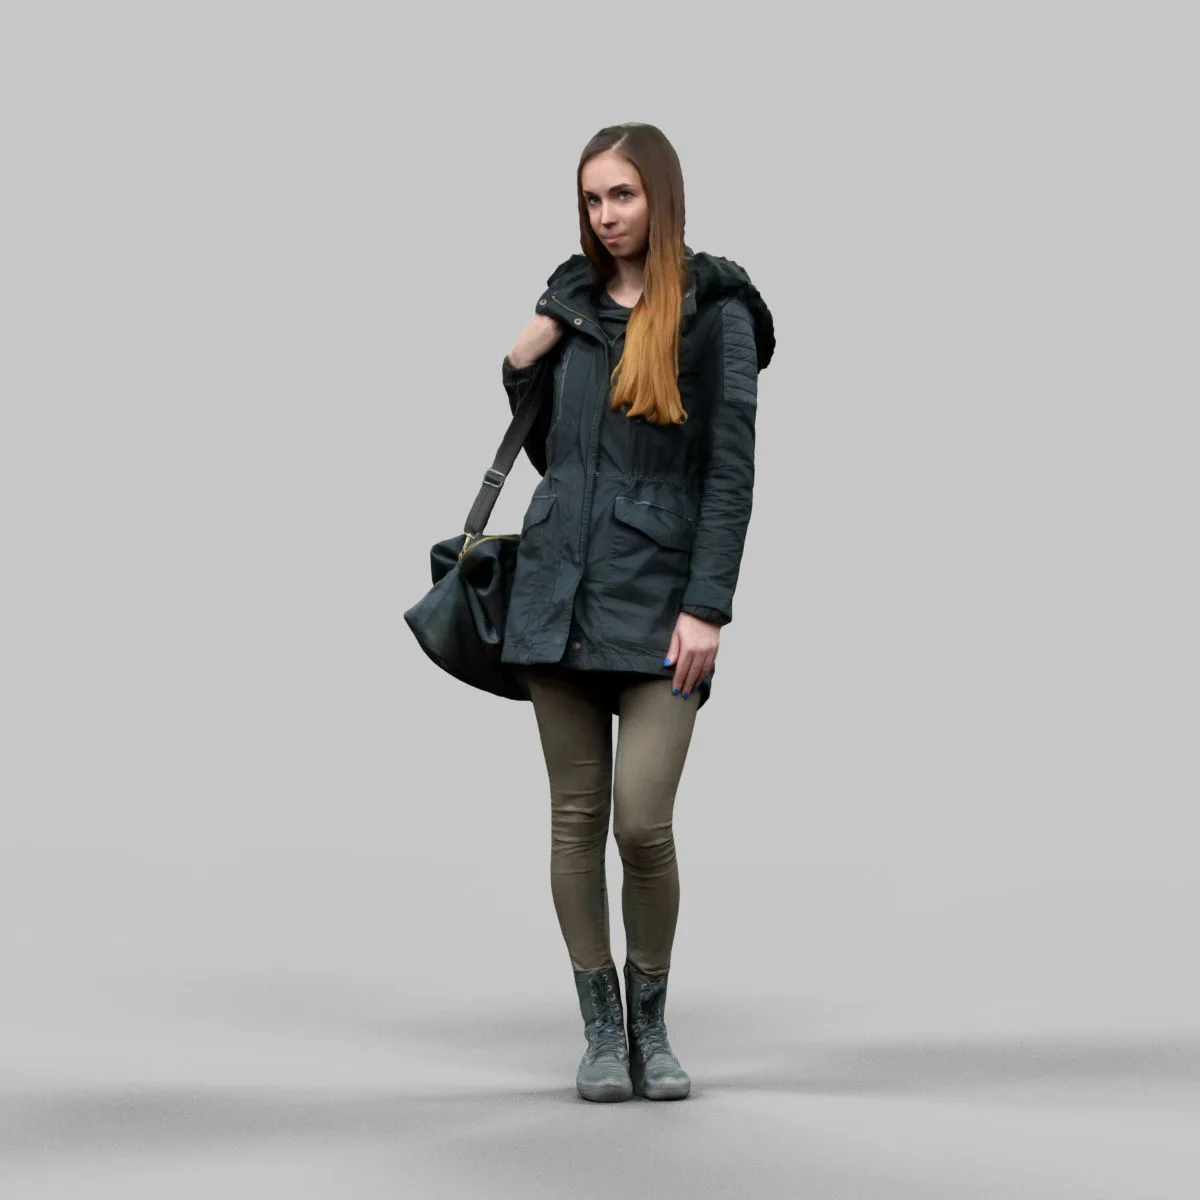 Girl in warm coat wearing bag